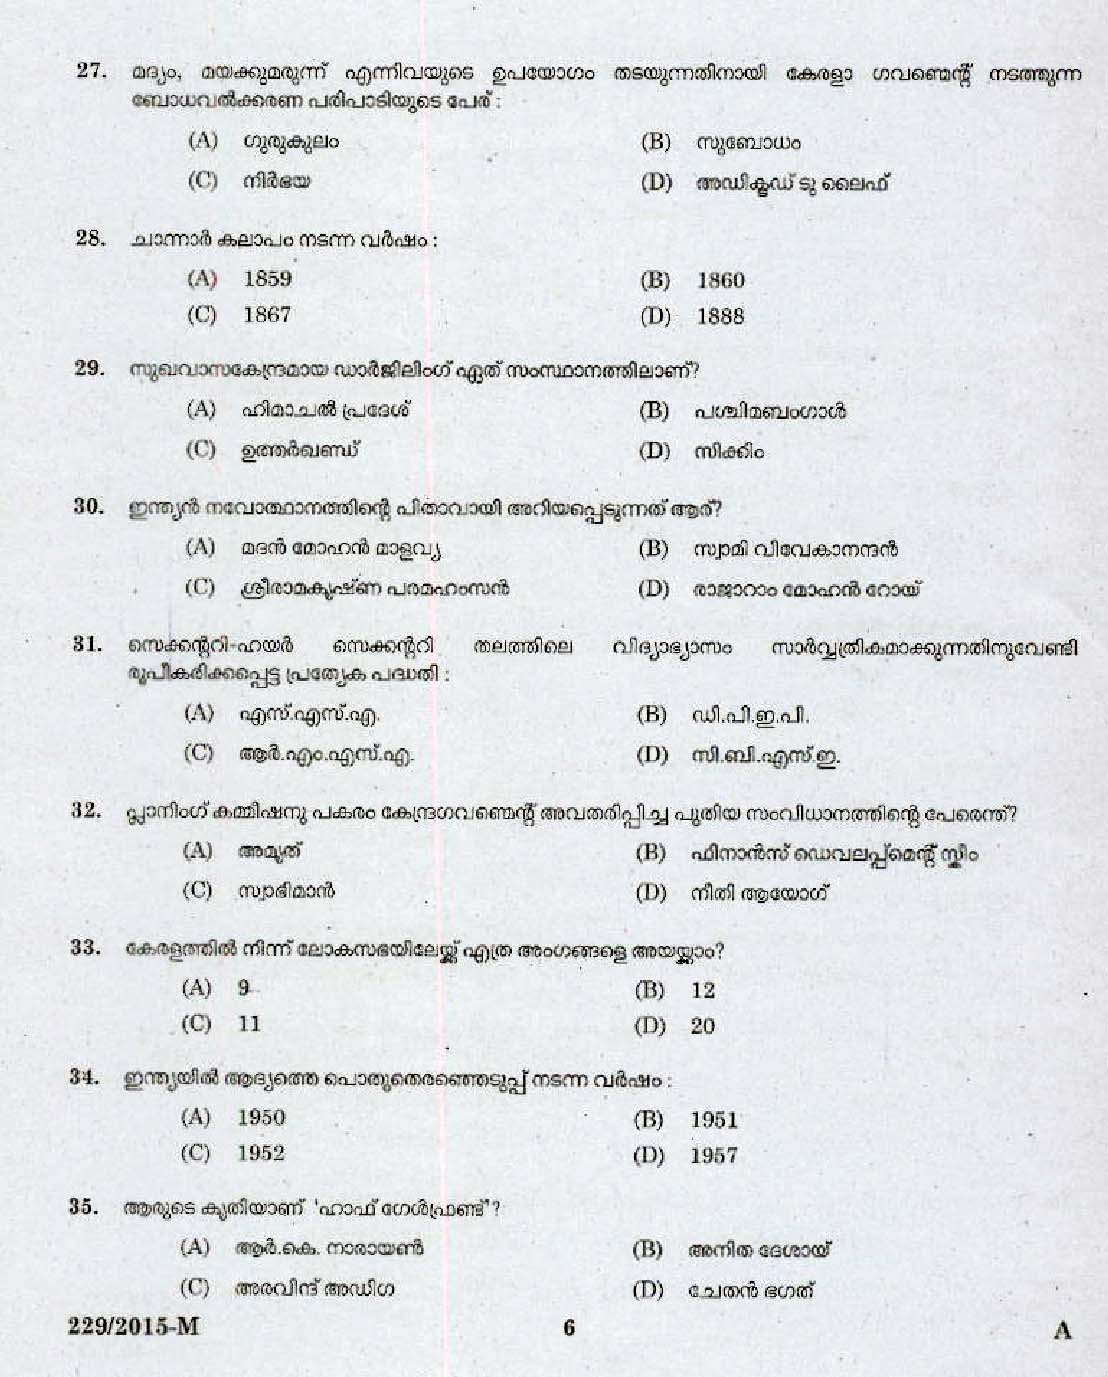 Kerala PSC Seaman Exam 2015 Question Paper Code 2292015 M 4